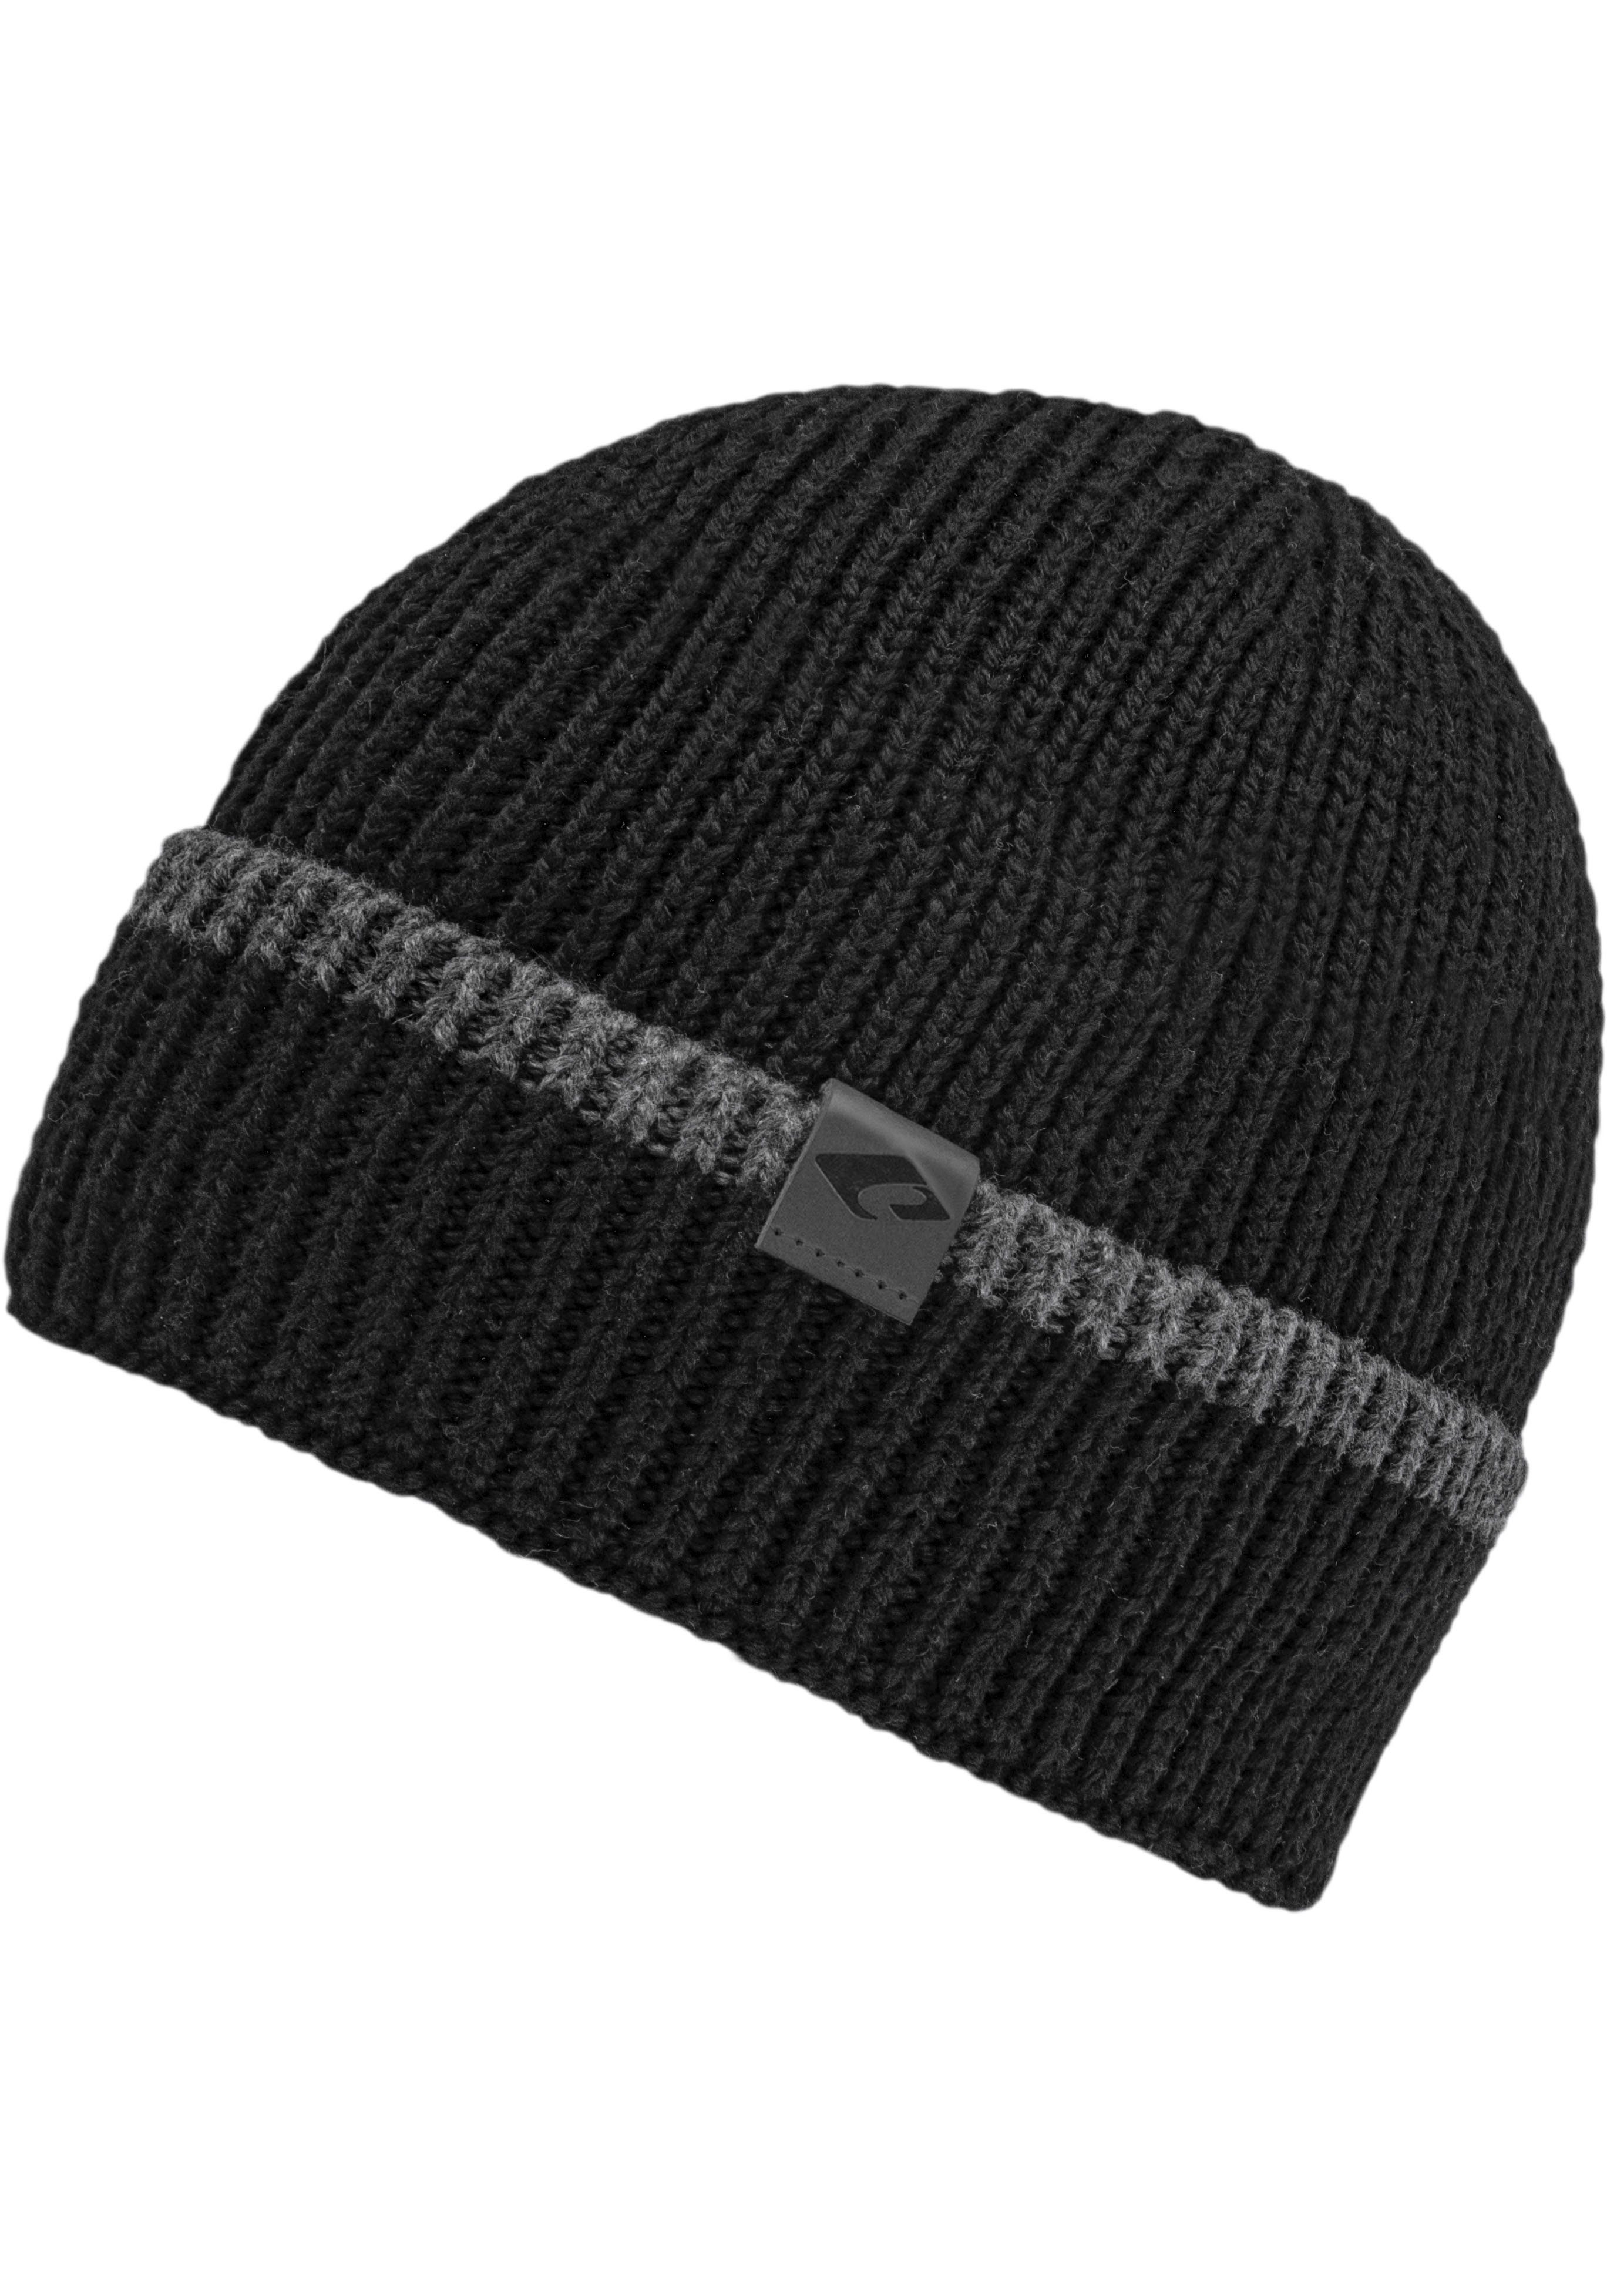 Rand Kontrastfarbener Pascal chillouts Strickmütze black Hat